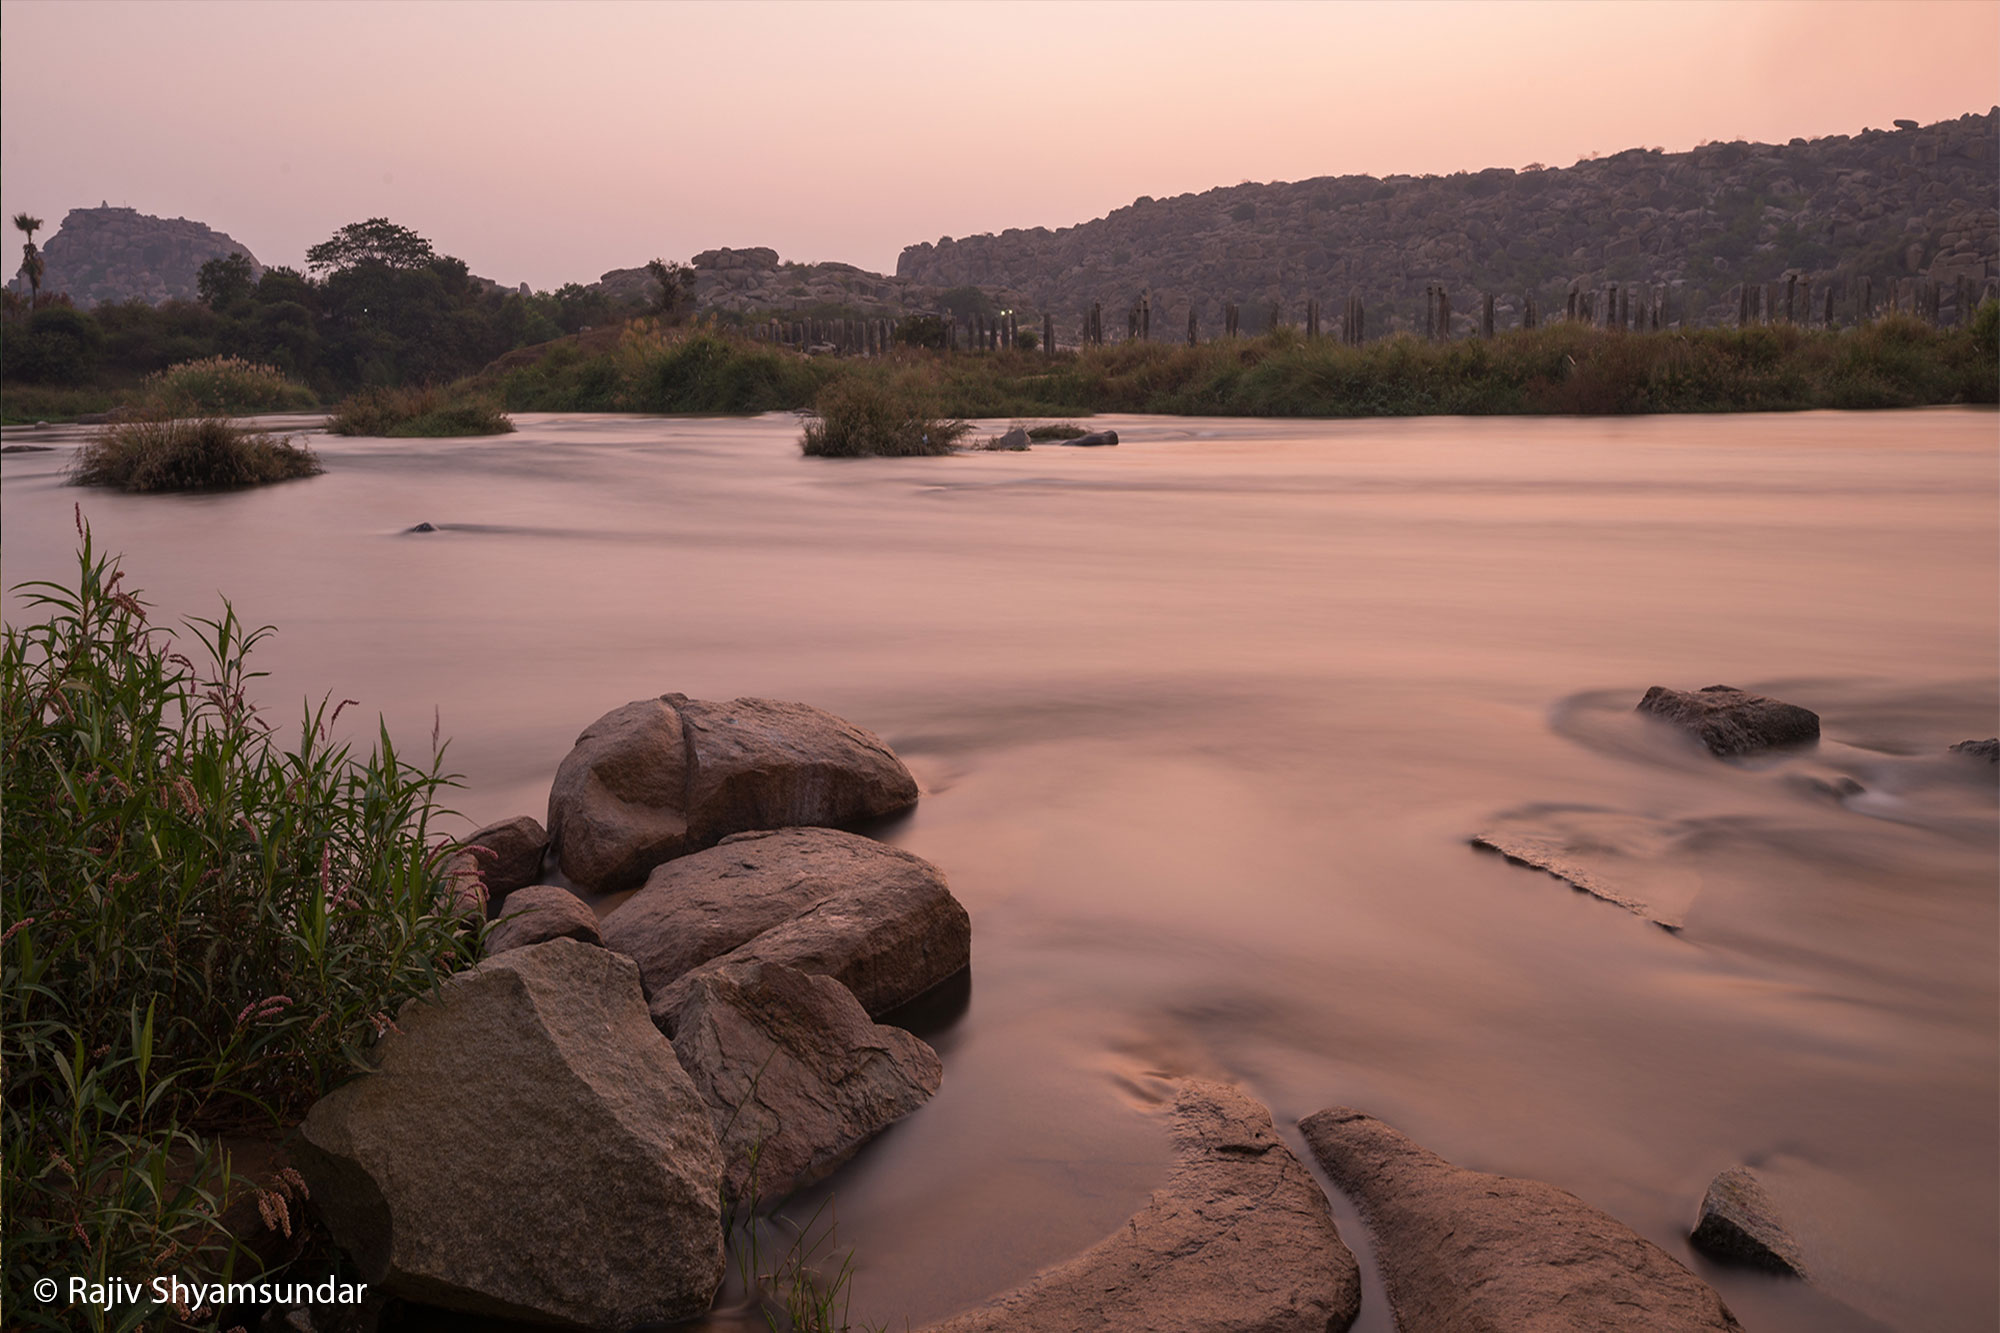 The Tungabhadra River in Hampi. © Rajiv Shyamsundar